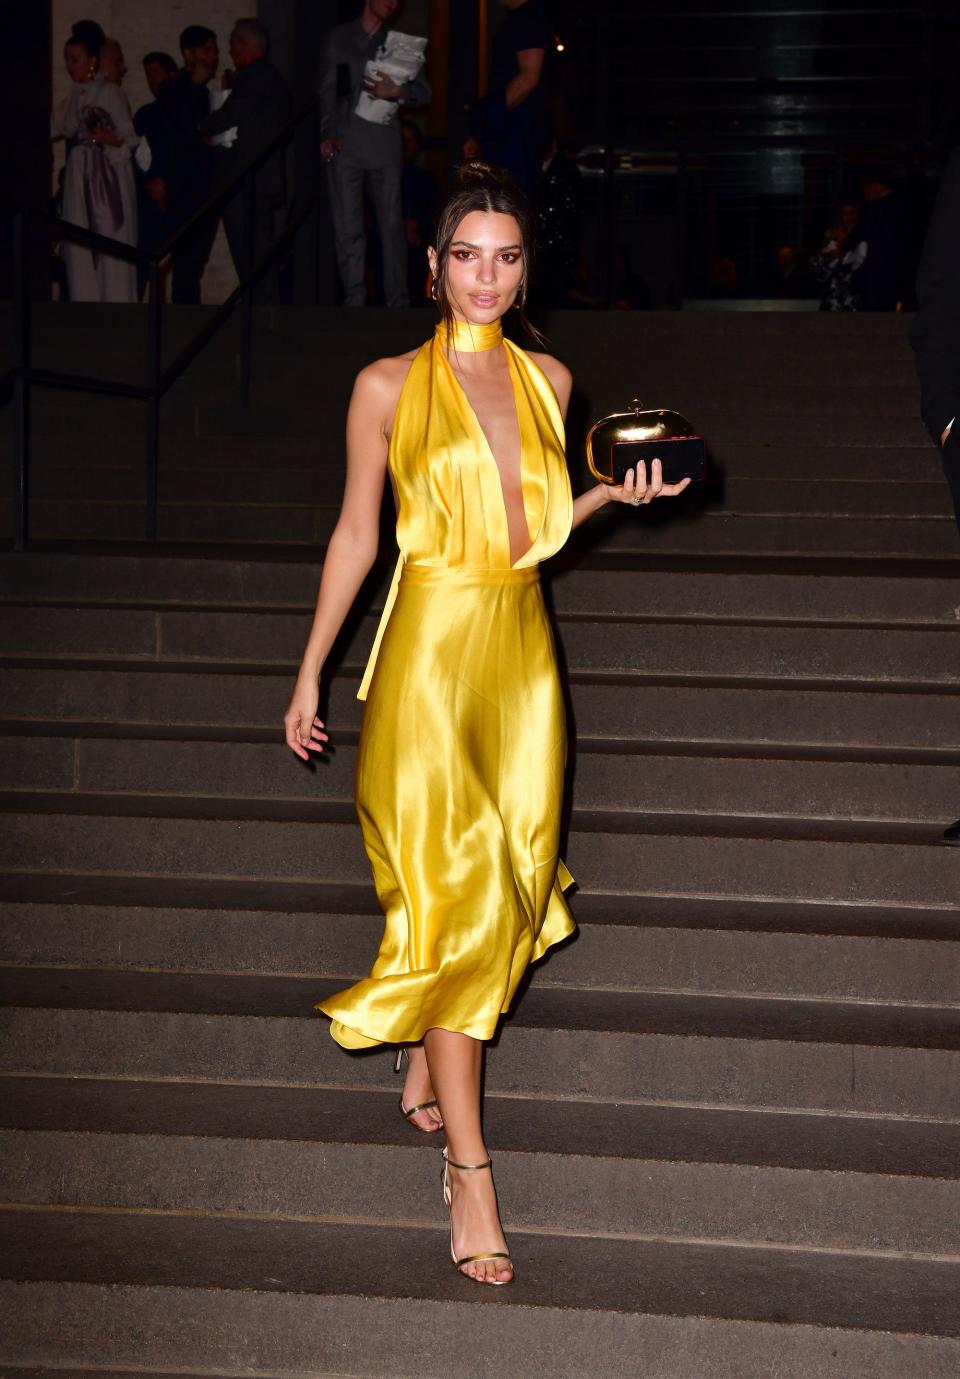 Emily Ratajkowski walks down a flight of stairs in a yellow dress.